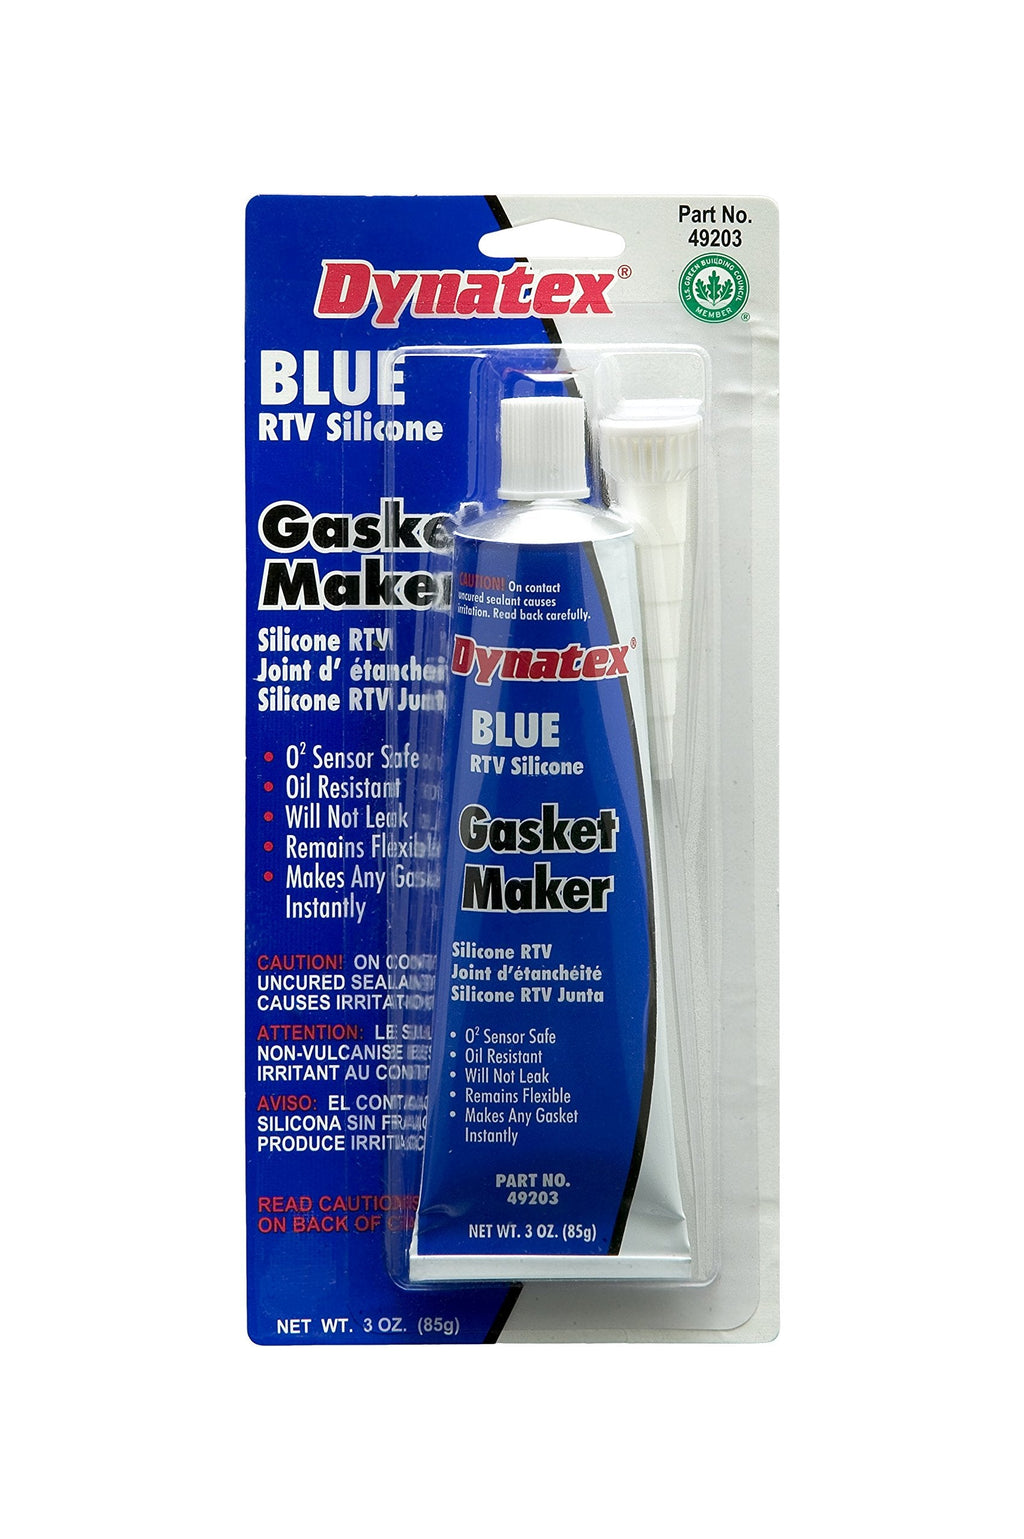  [AUSTRALIA] - Dynatex 49203 Low Volatile RTV Silicone Gasket Maker, 0 to 500 Degree F, 3 oz Carded Tube, Blue